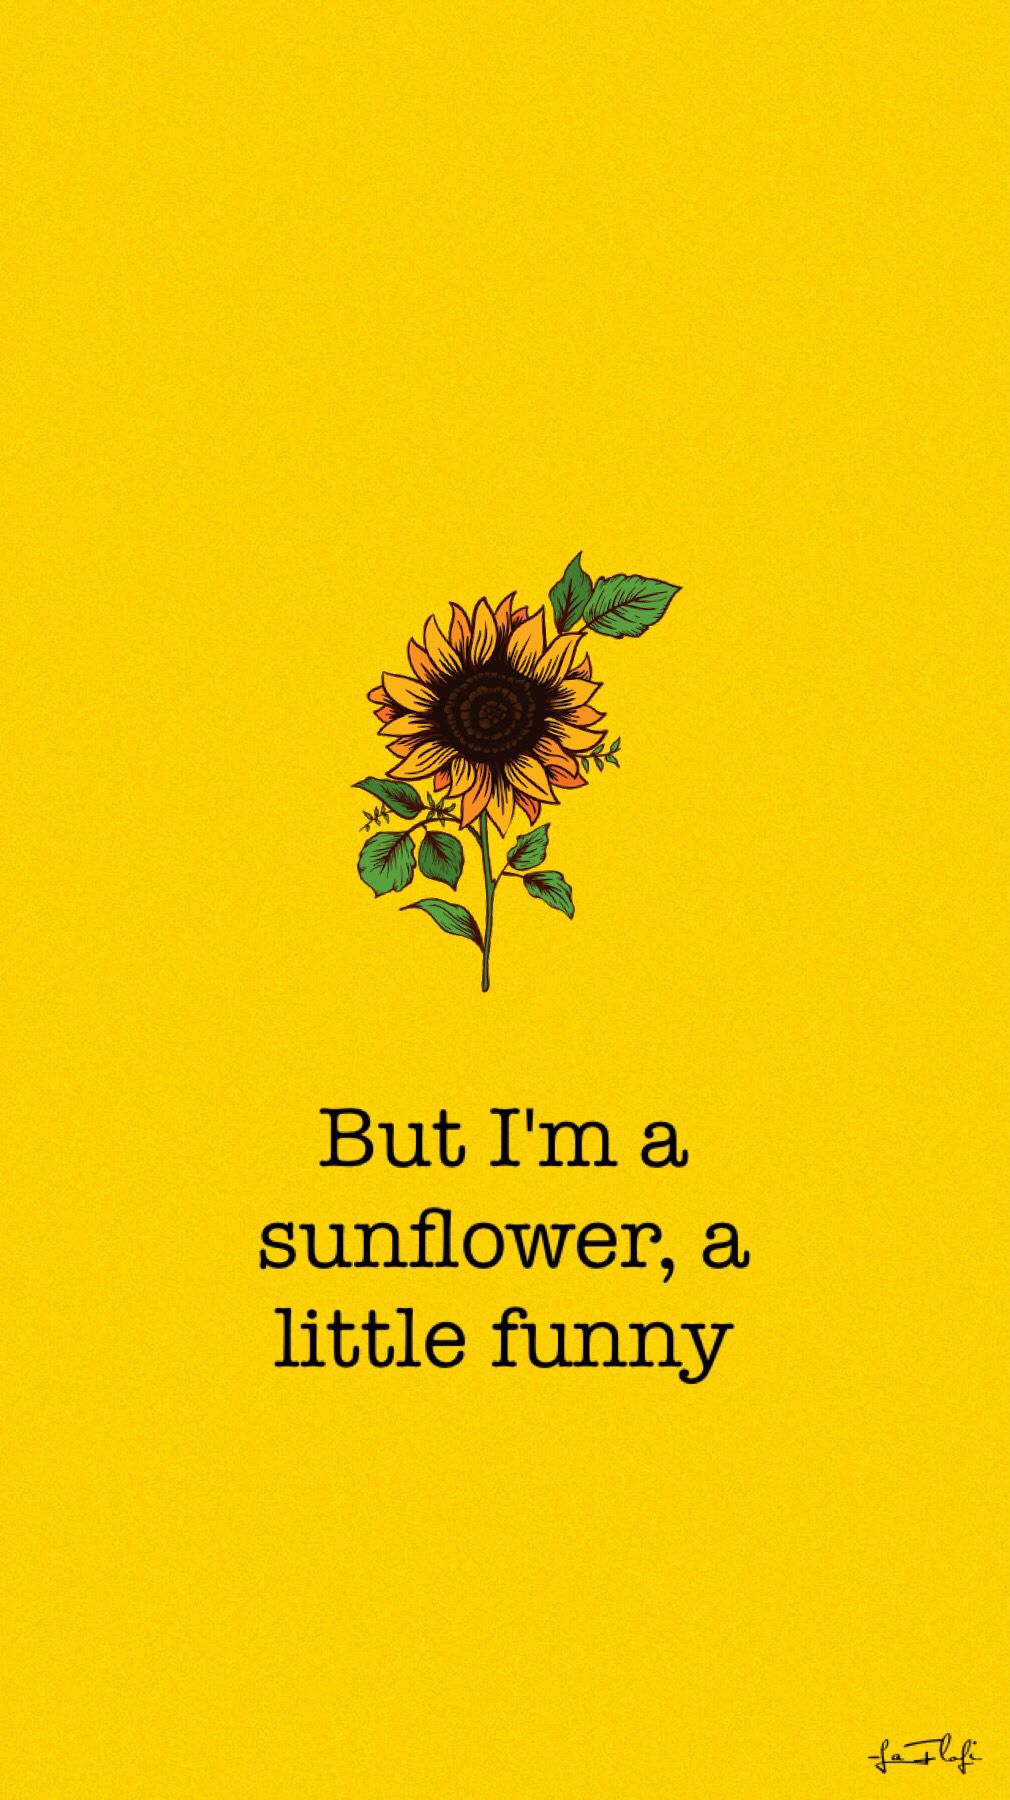 Movie Sierra Burgess Is A Loser Quotes Sunflower Wallpaper